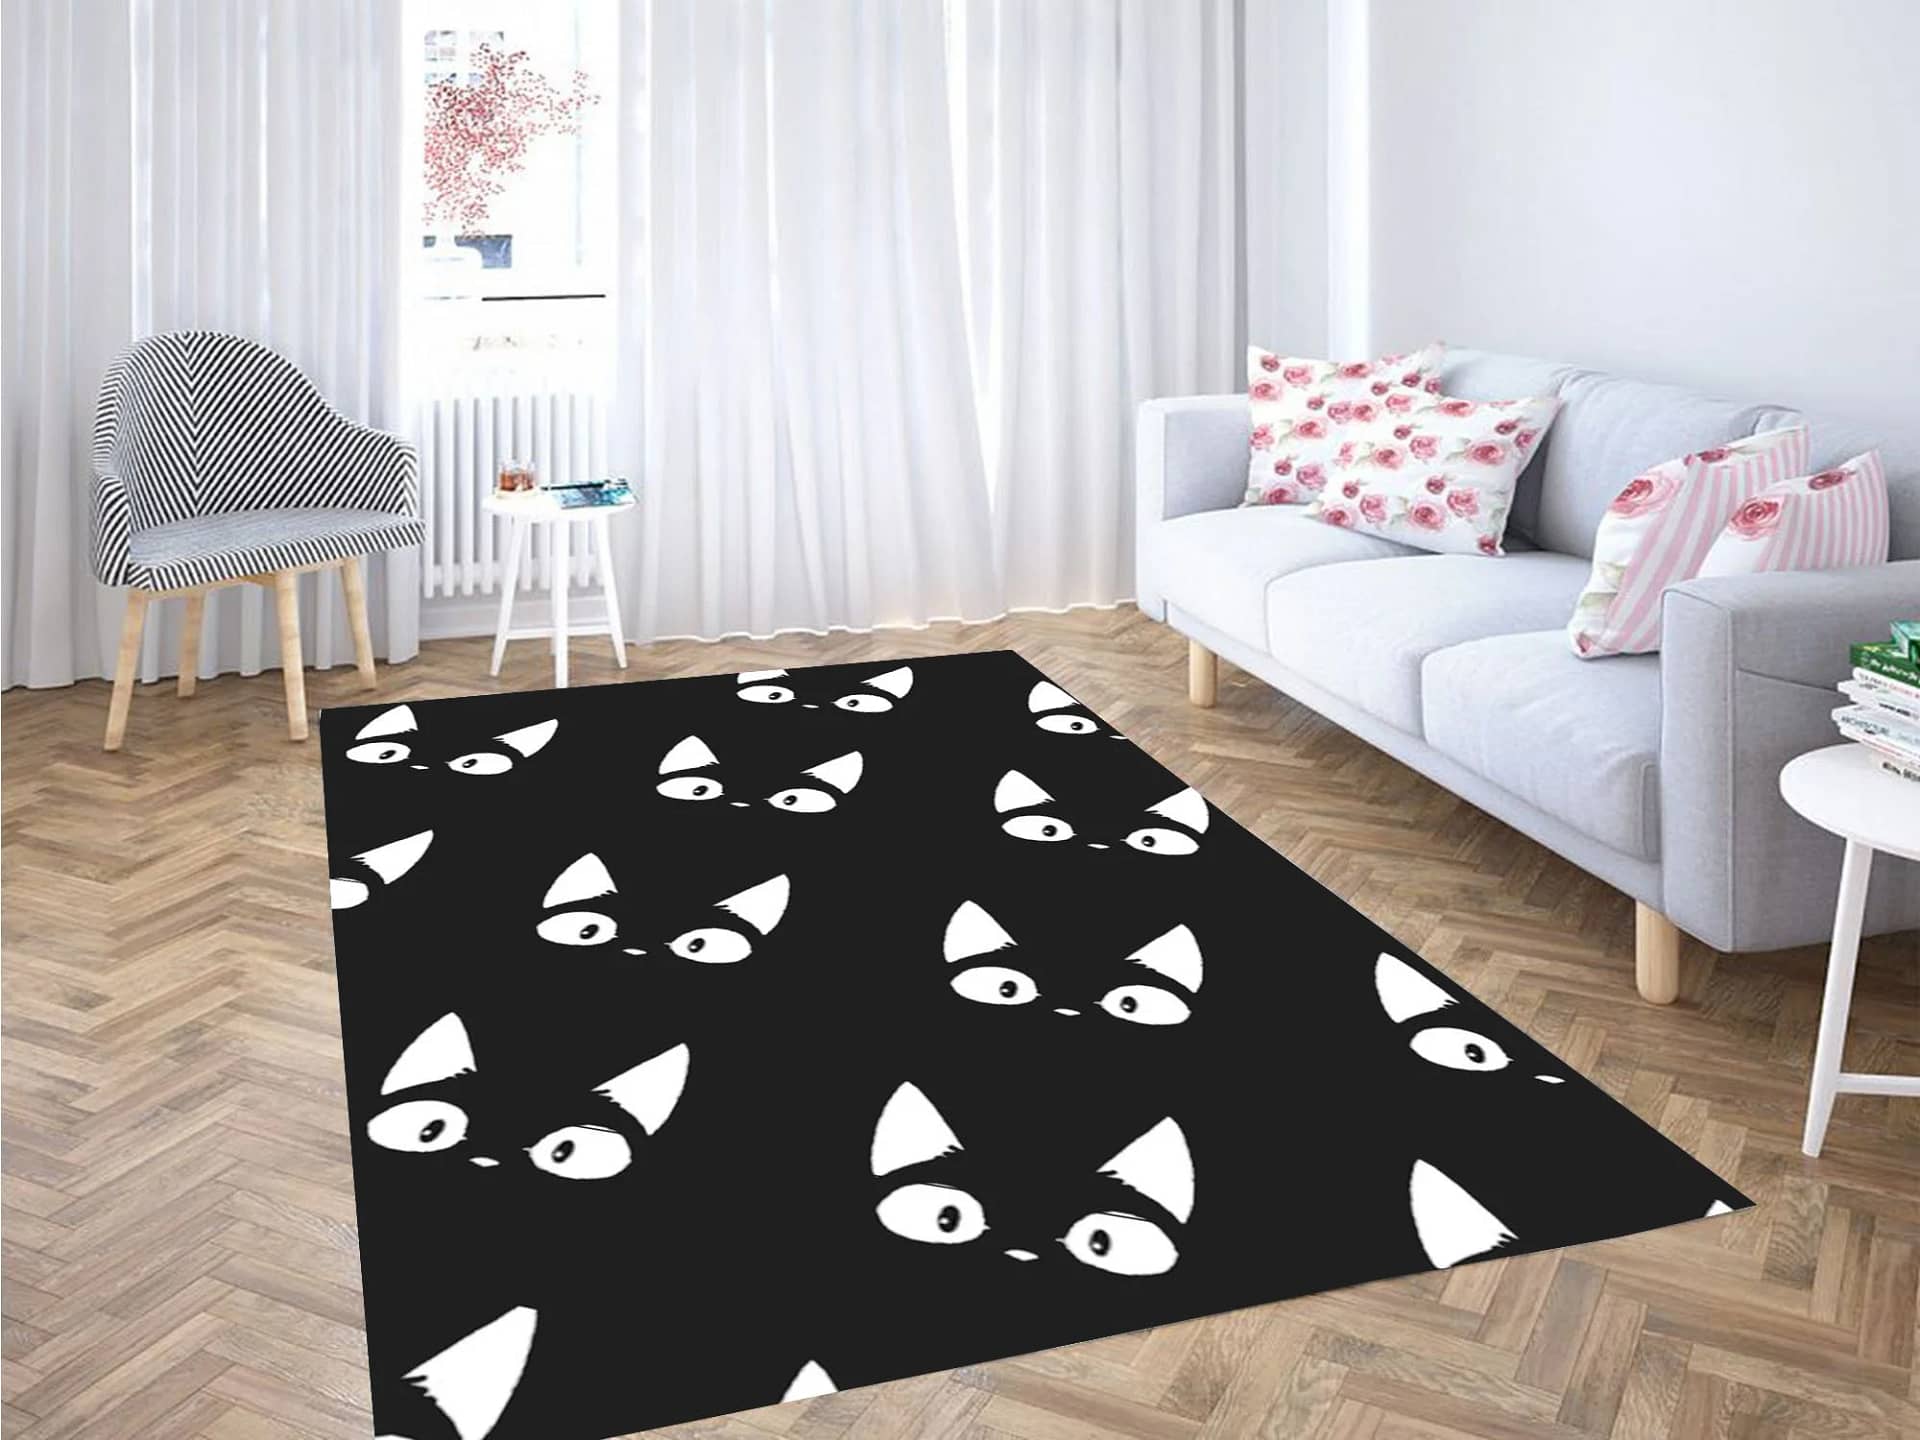 Cat Black And White Carpet Rug